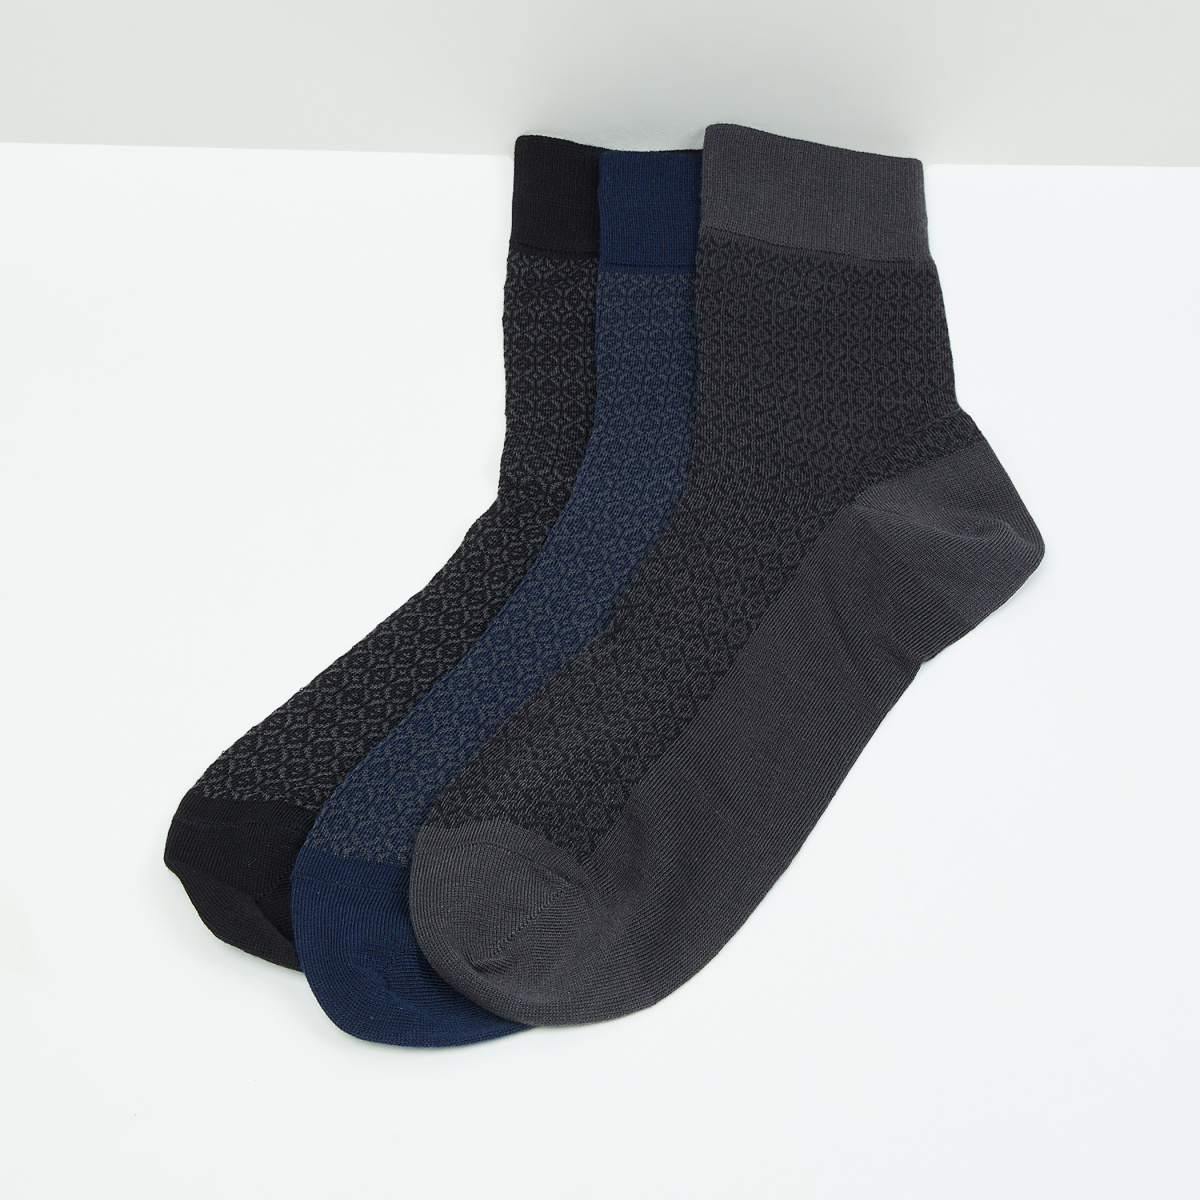 MAX Patterned Socks - Set of 3